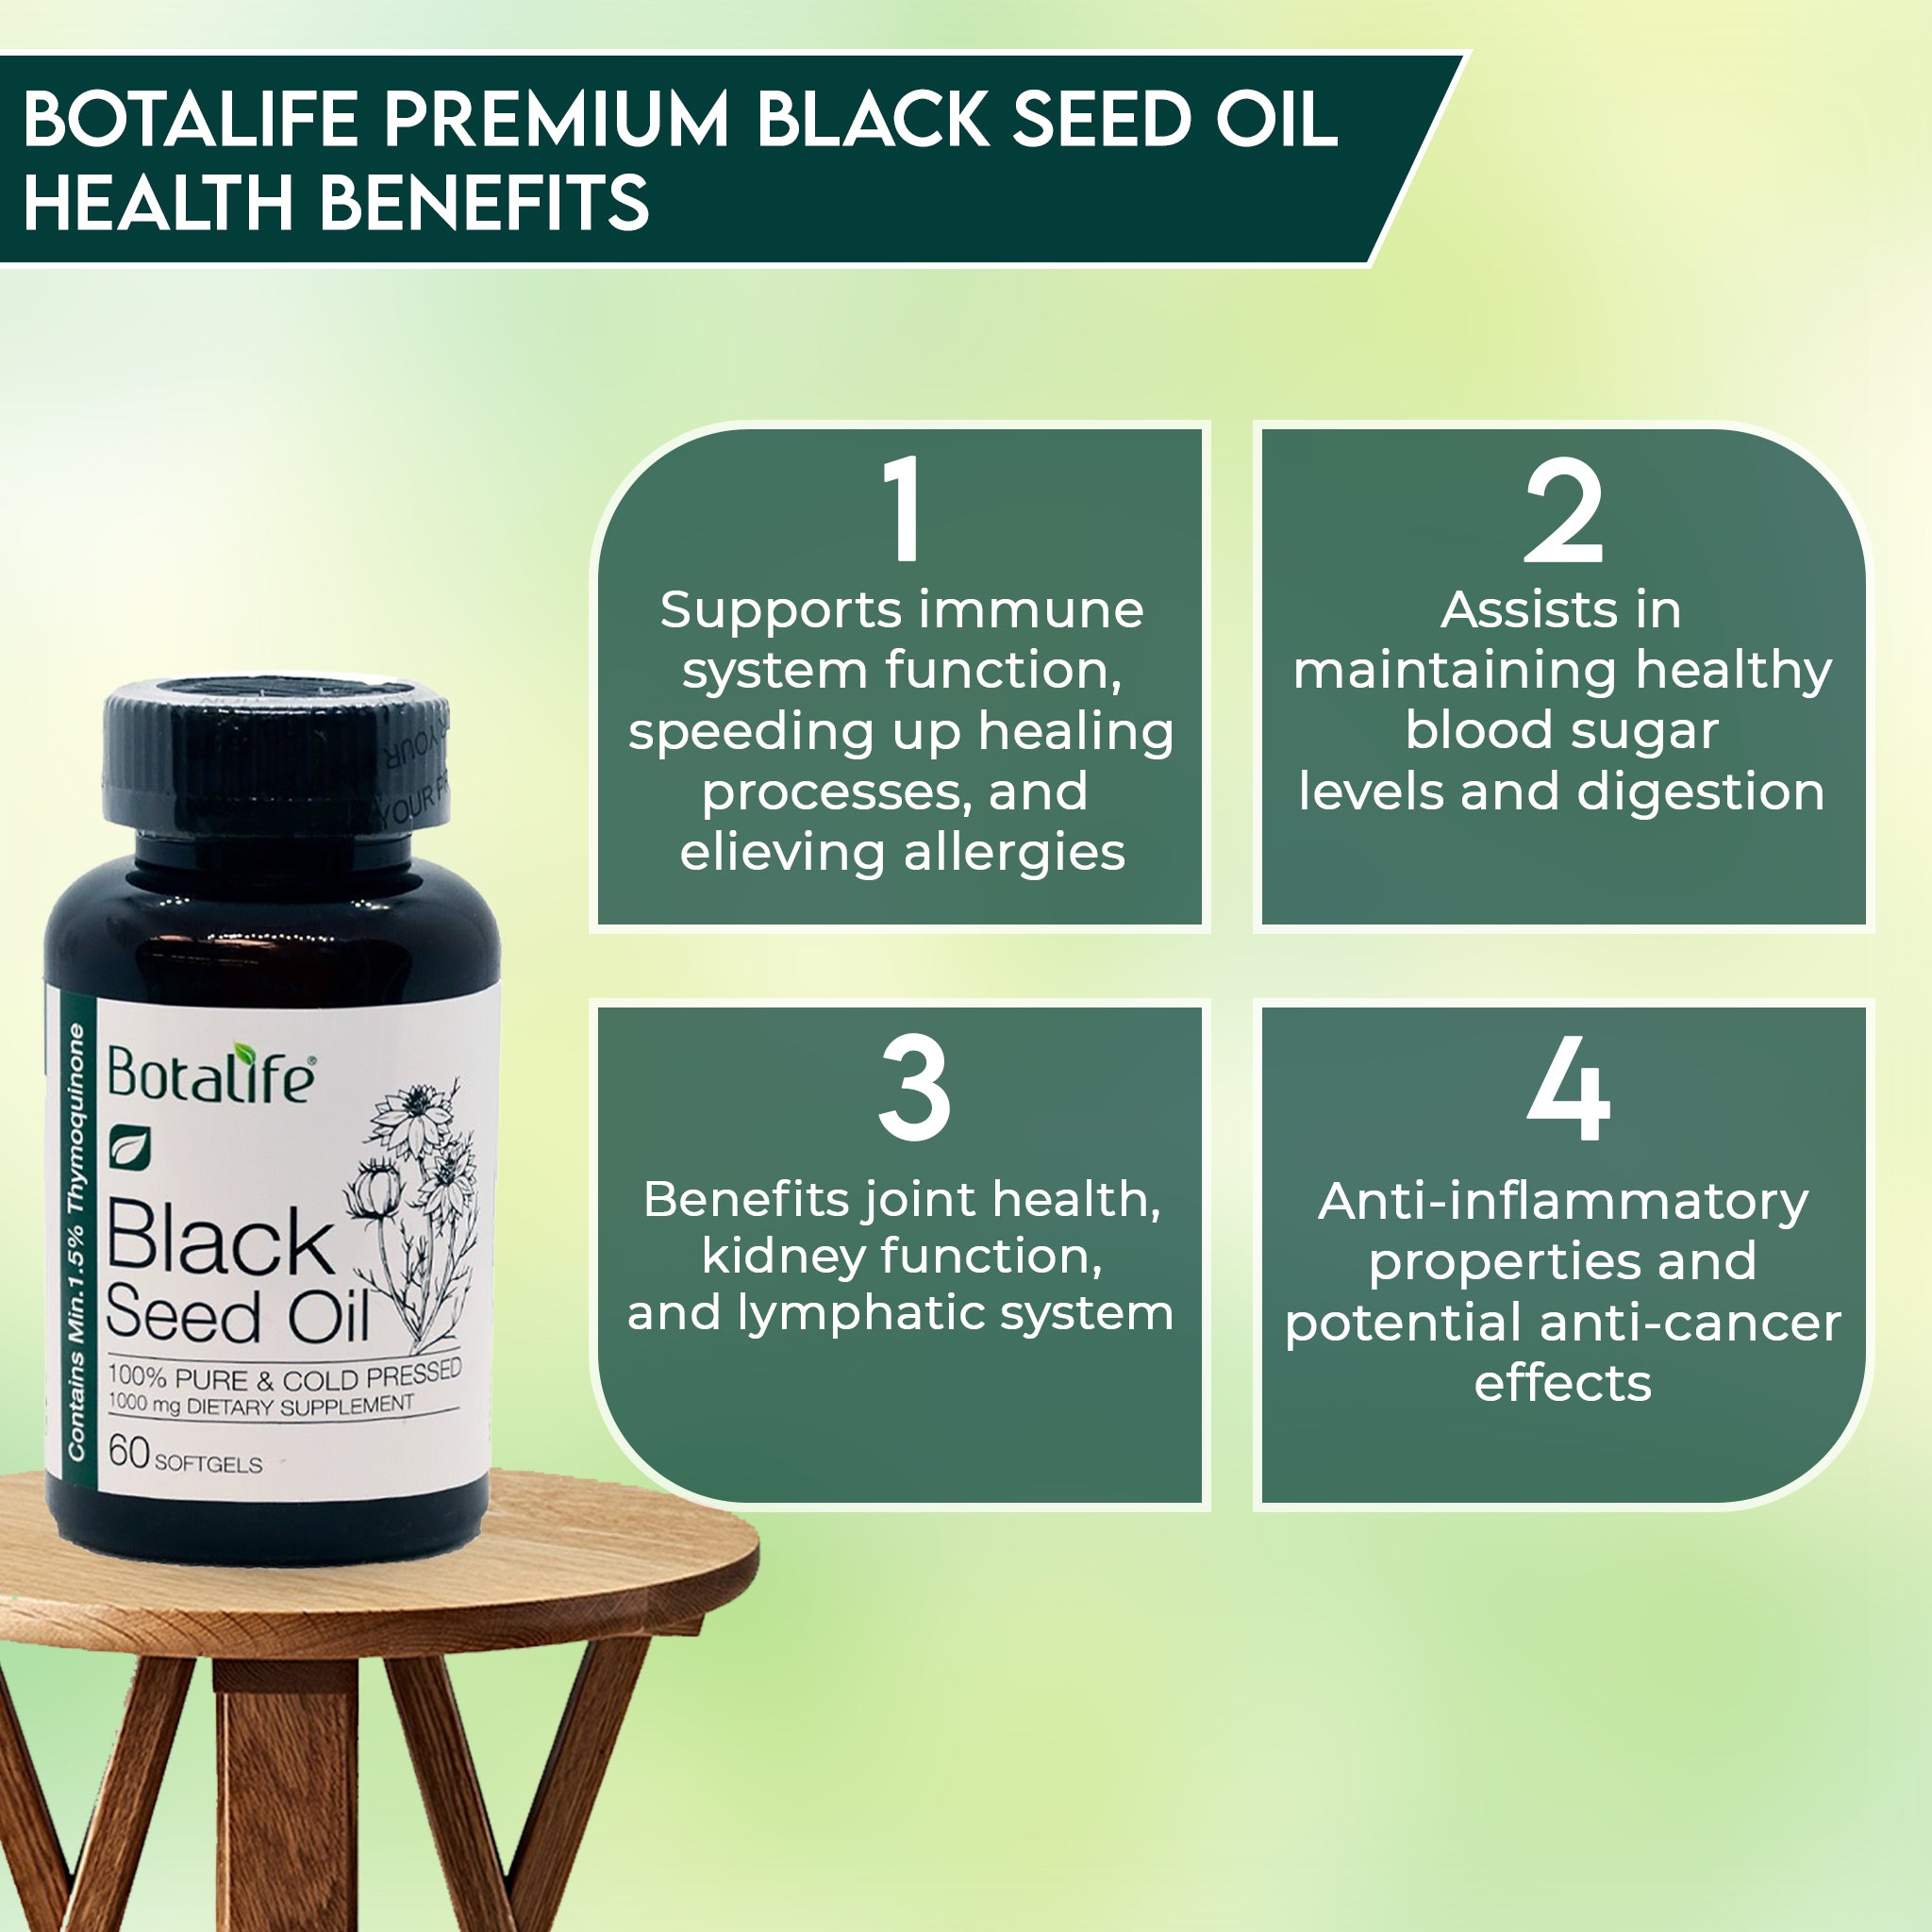 Botalife Black seed oil speeding up healing processes